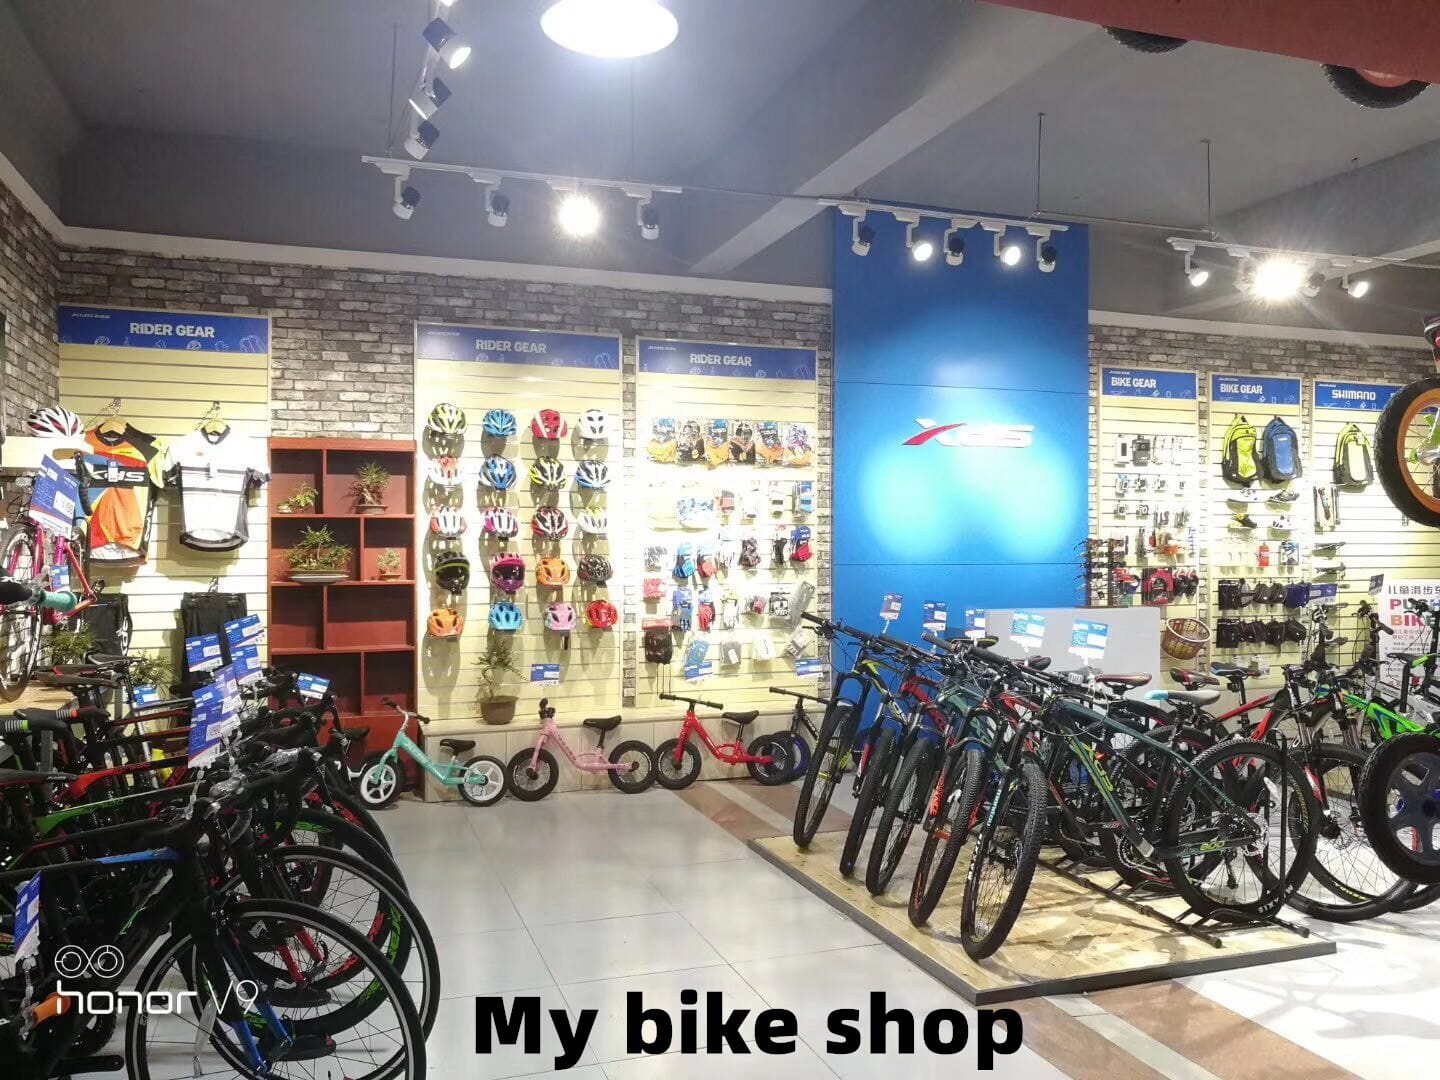 bike shop suppliers